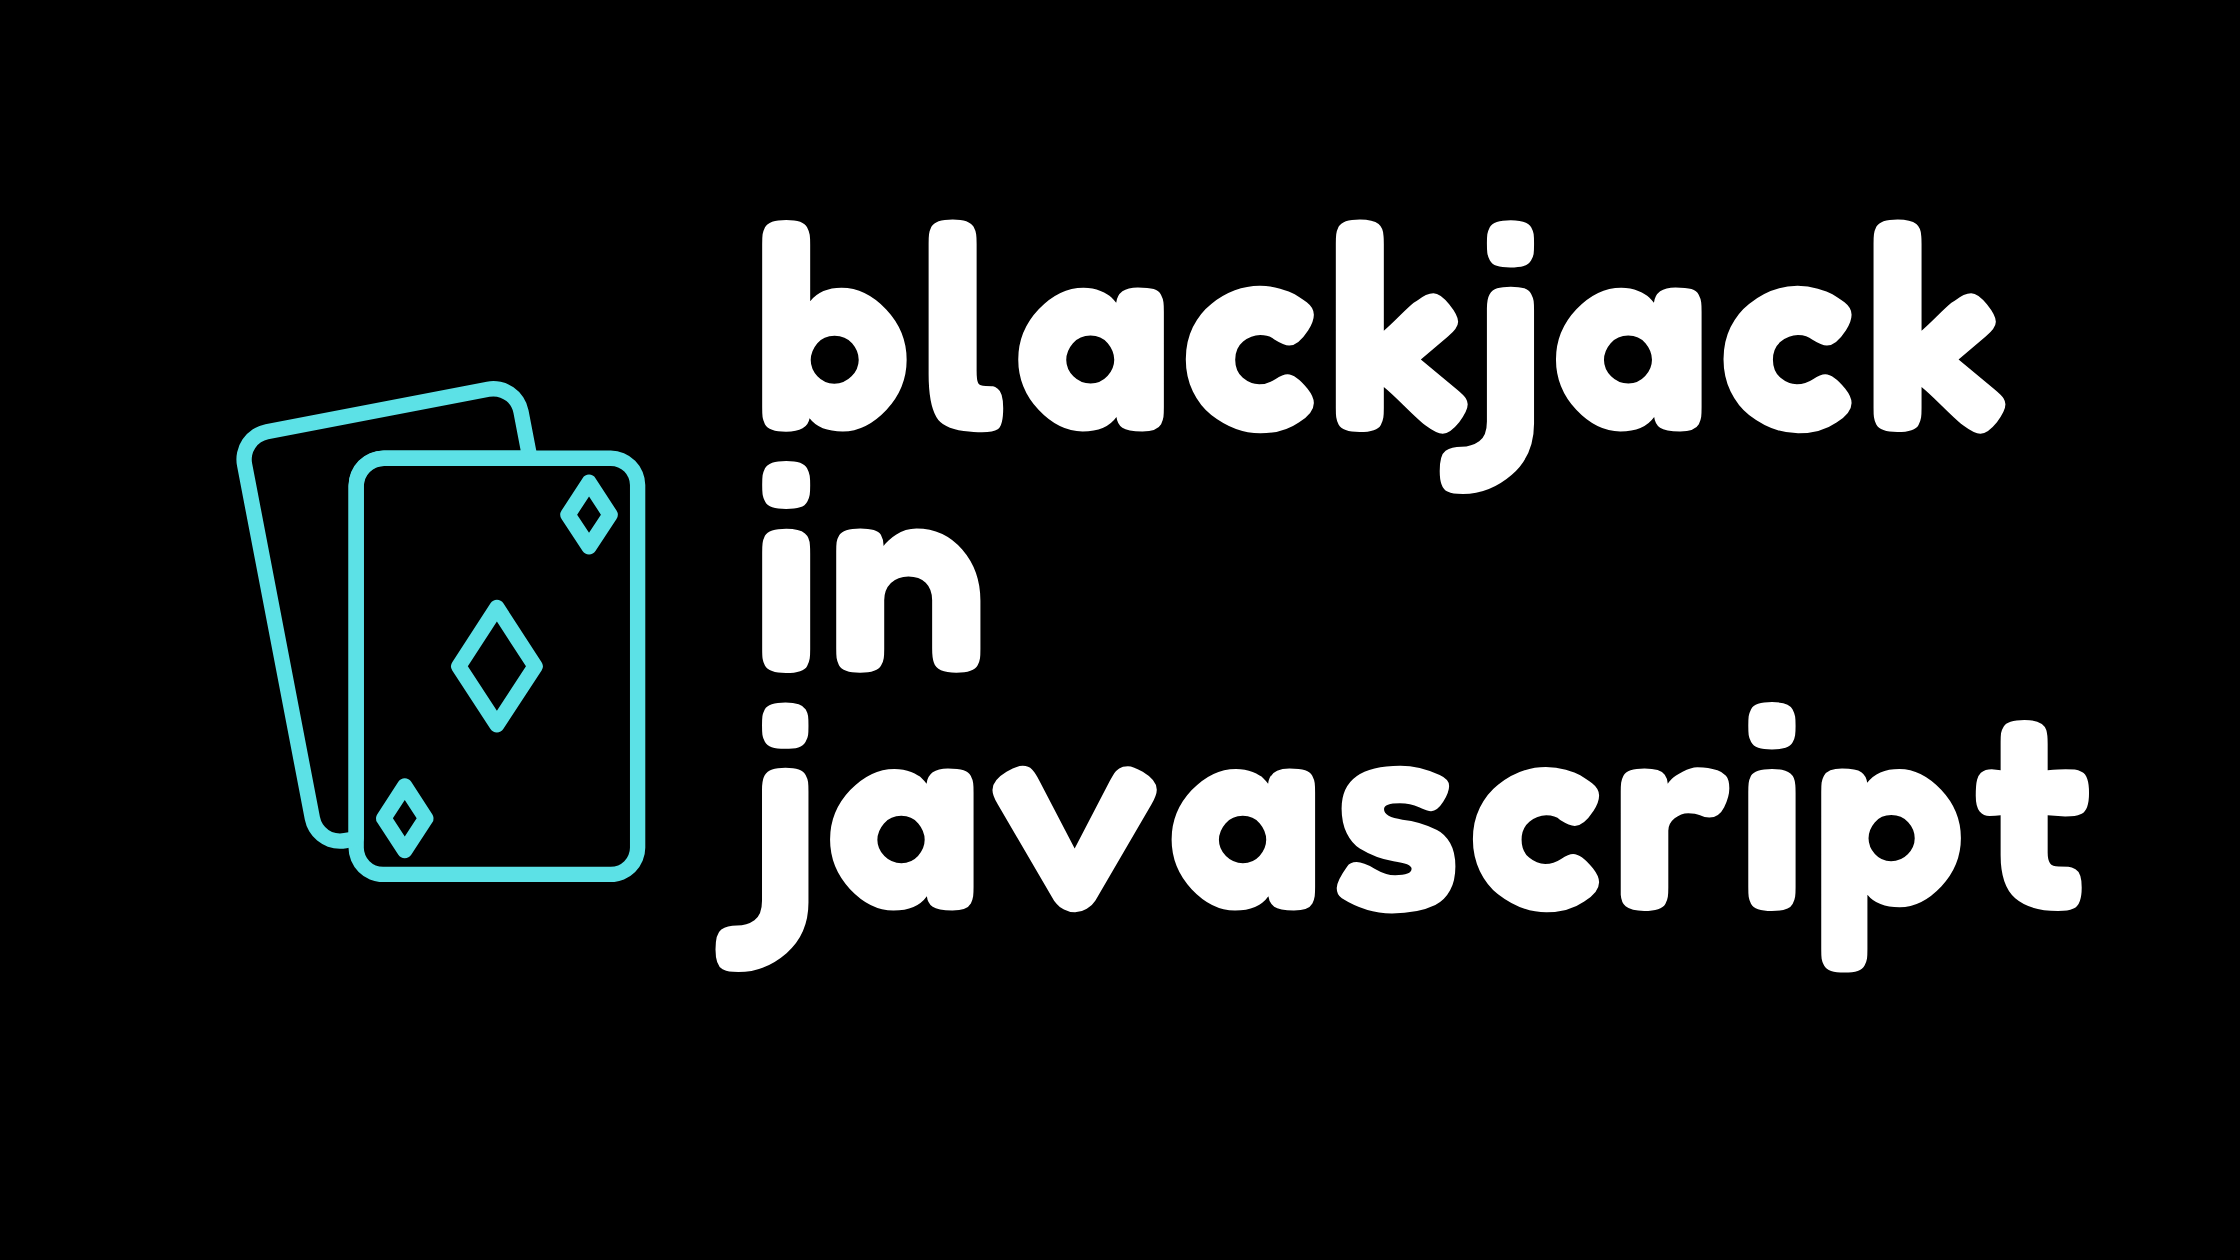 How To Code Blackjack Using JavaScript